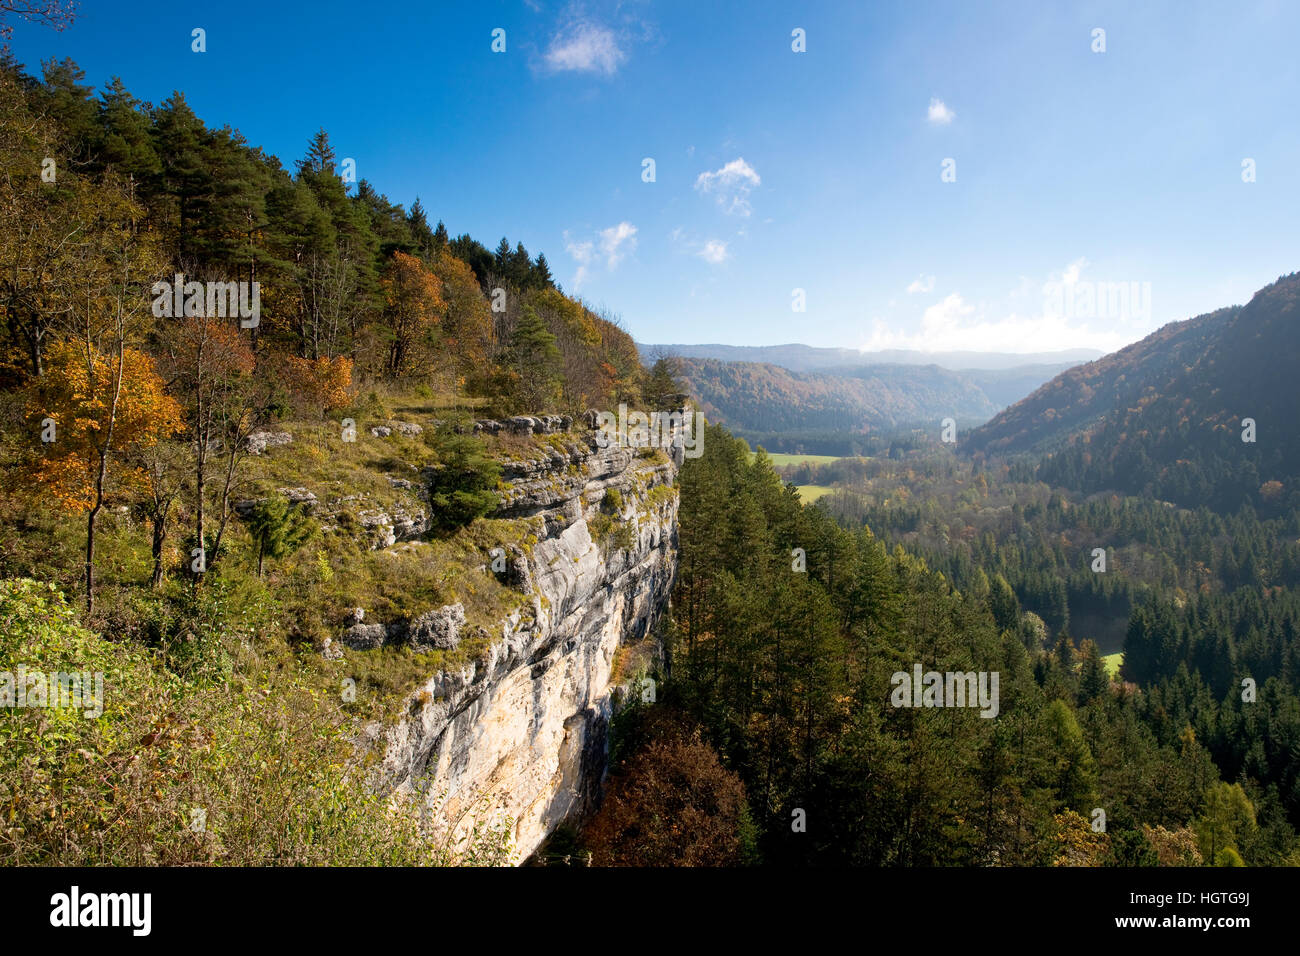 Parc naturel régional du Haut-Jura ( Jura Mountains Regional Natural Park) ) near Saint Claude, France Stock Photo